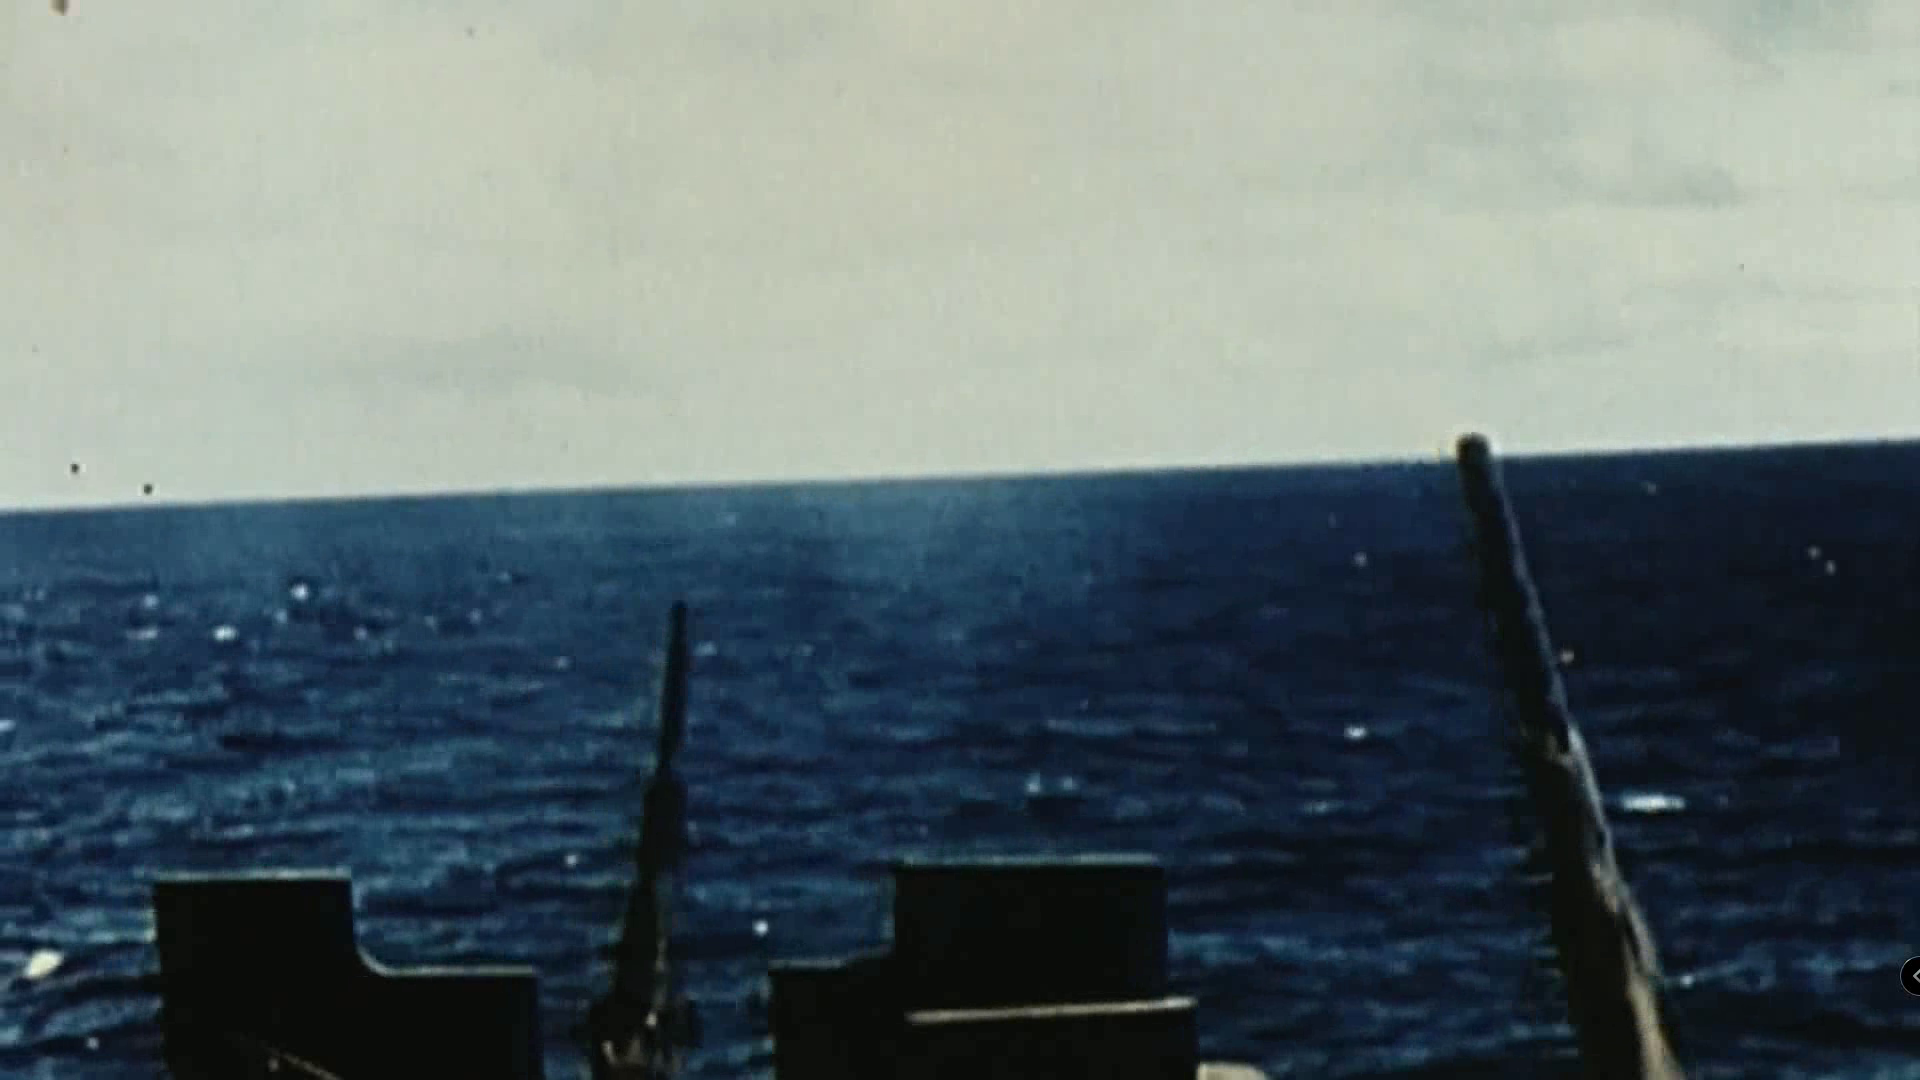 Ultimate Warfare S01E04 Leyte Gulf Courage at Sea 1080p AVI MP3 Web DL 2 1GB